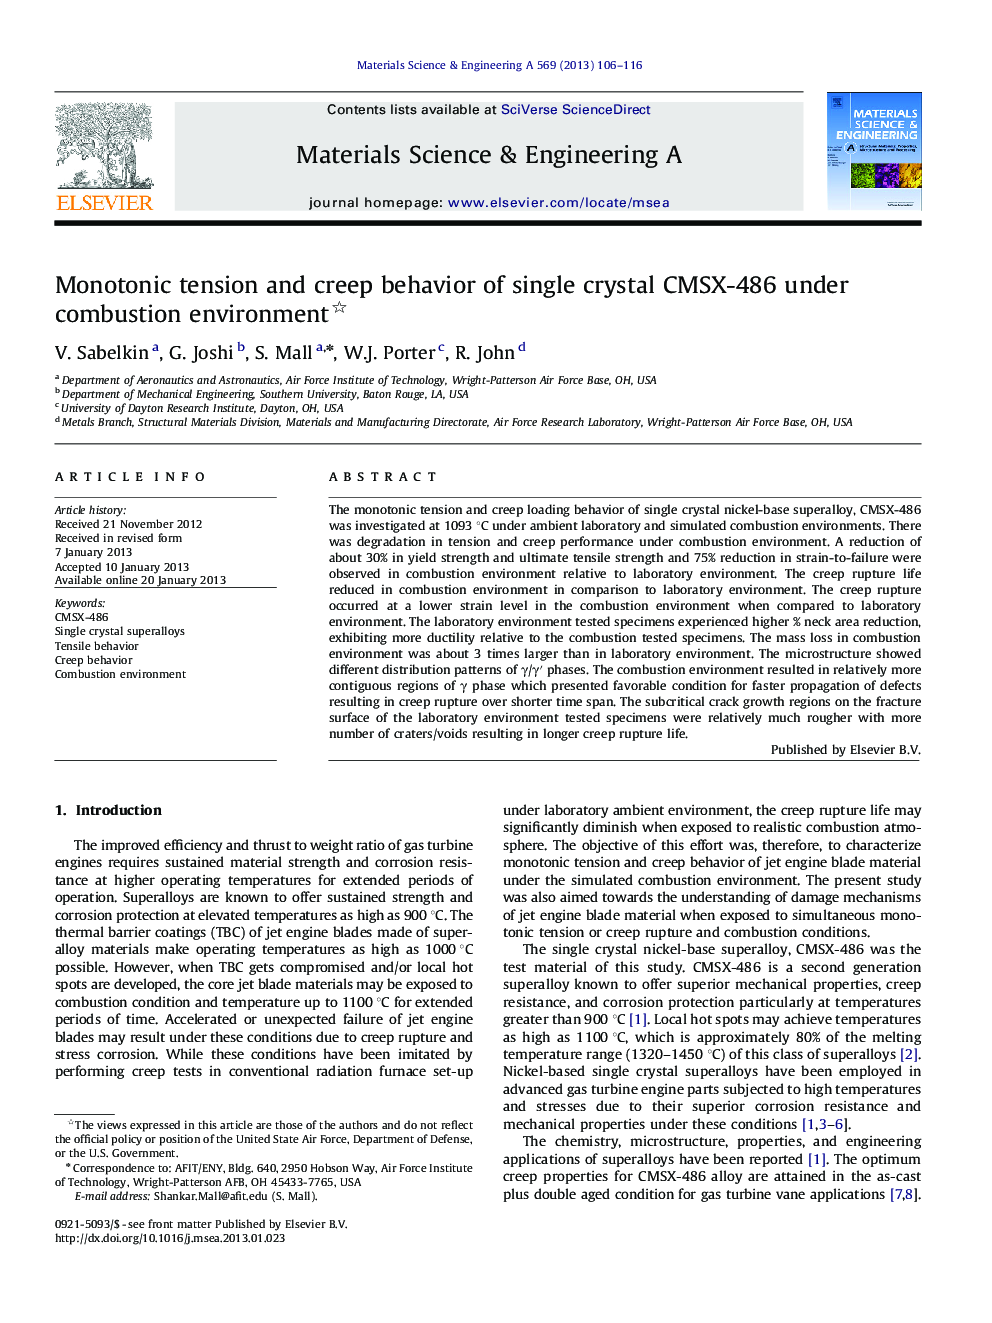 Monotonic tension and creep behavior of single crystal CMSX-486 under combustion environment